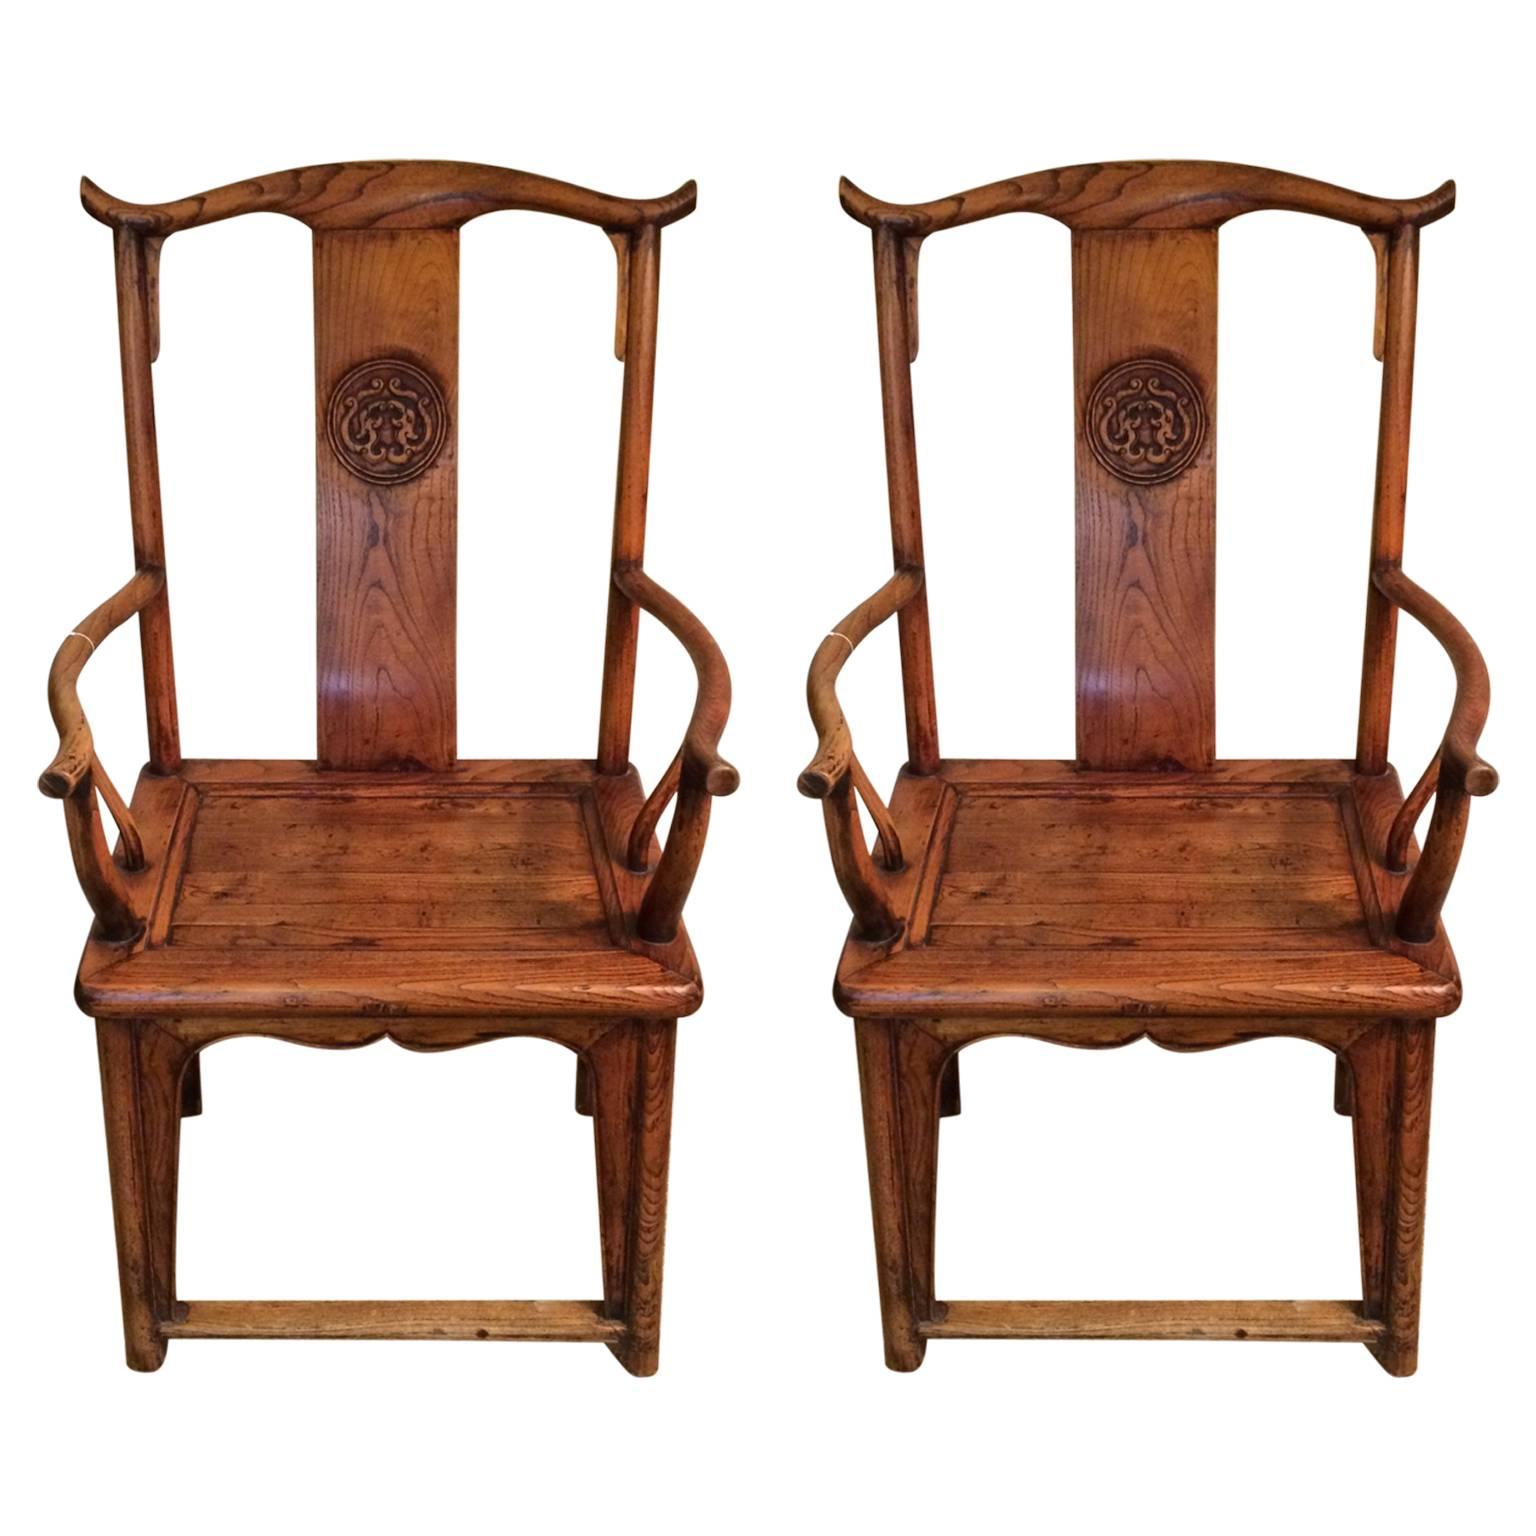 Pair of Chinese Hardwood Yoke-Back Chairs